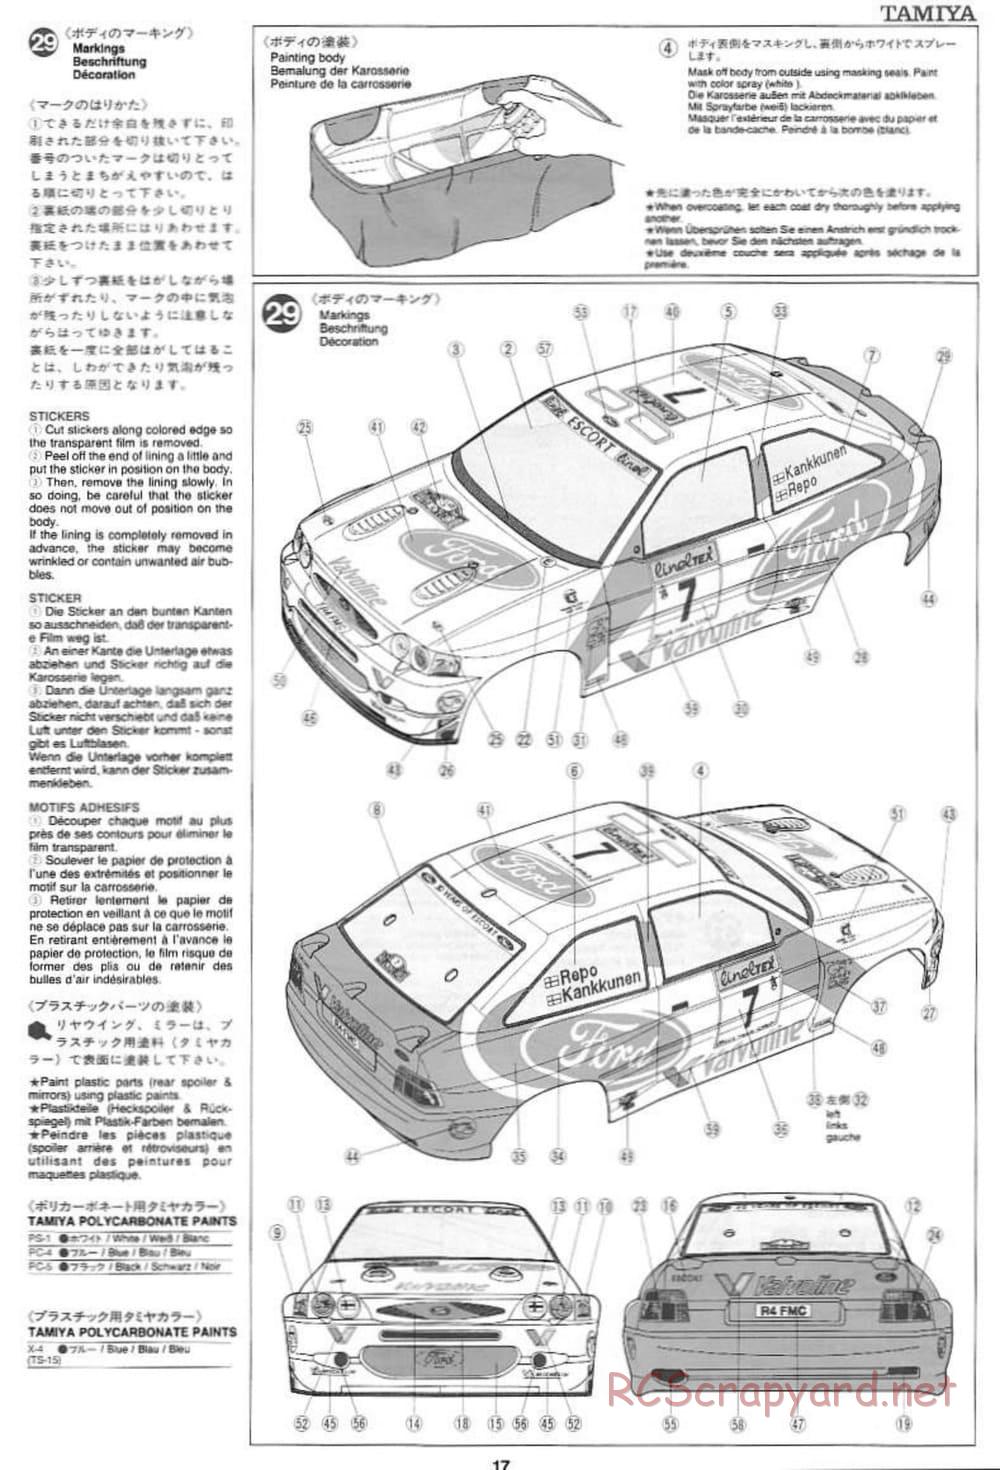 Tamiya - Ford Escort WRC - TL-01 Chassis - Manual - Page 17